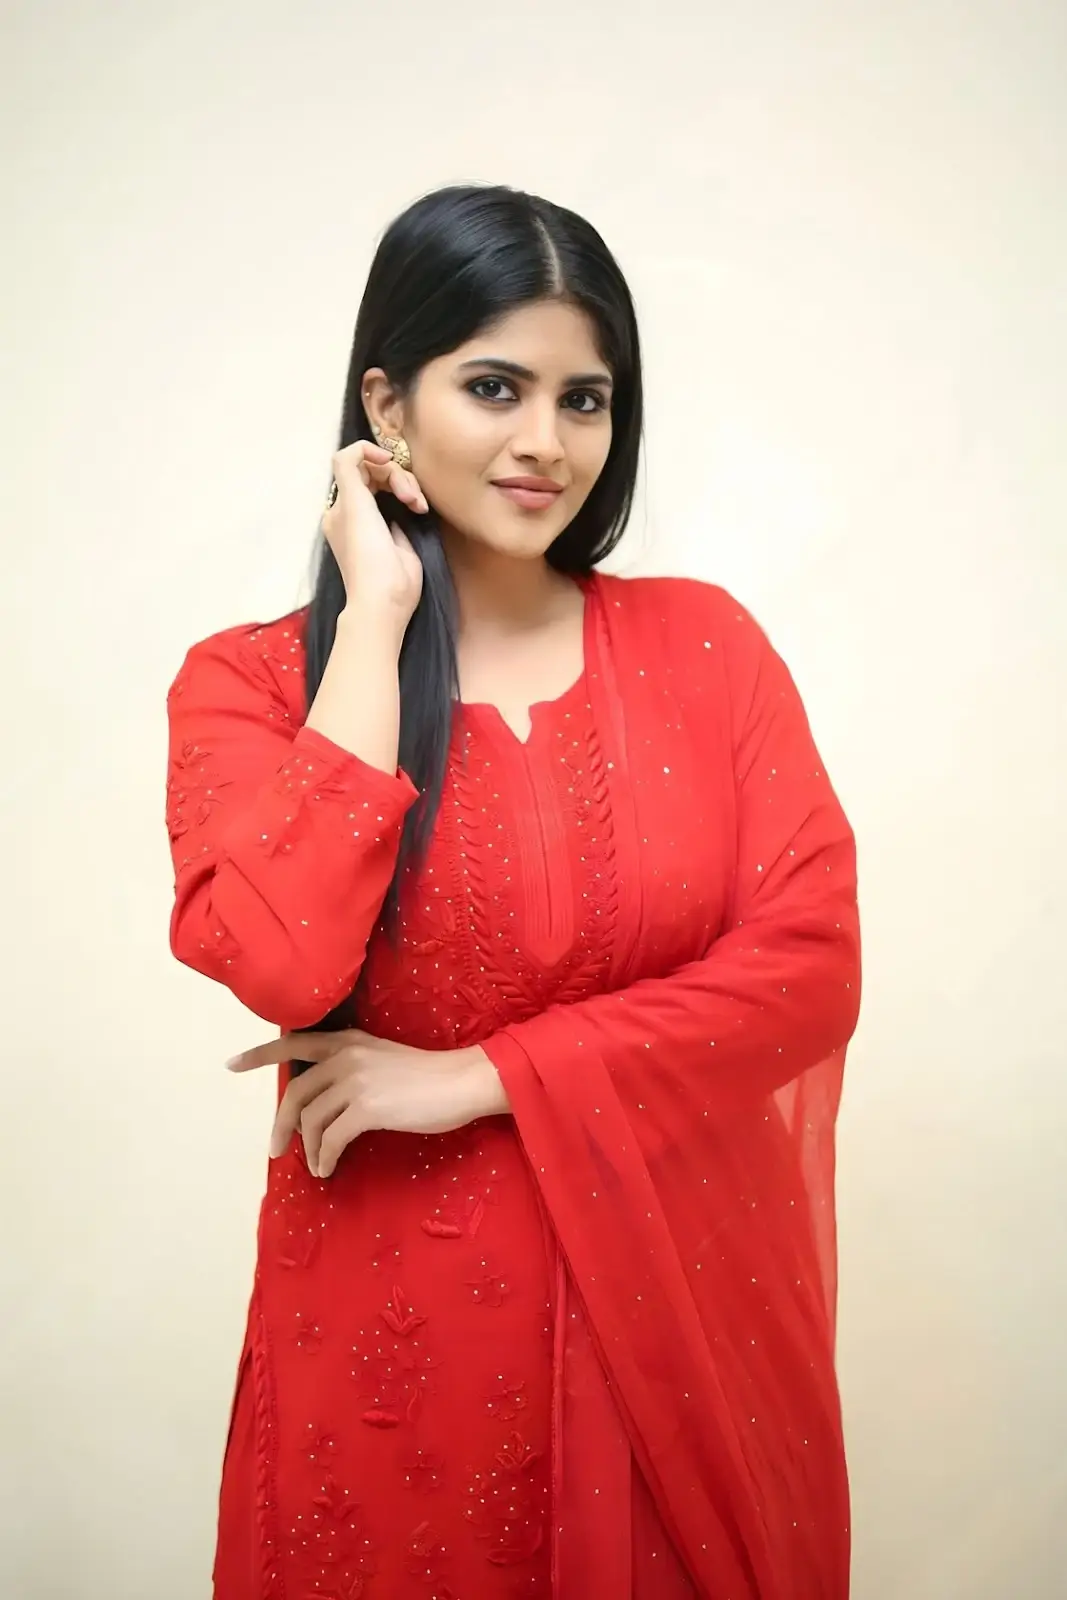 BEAUTIFUL INDIAN MODEL MEGHA AKASH STILLS IN RED DRESS 2